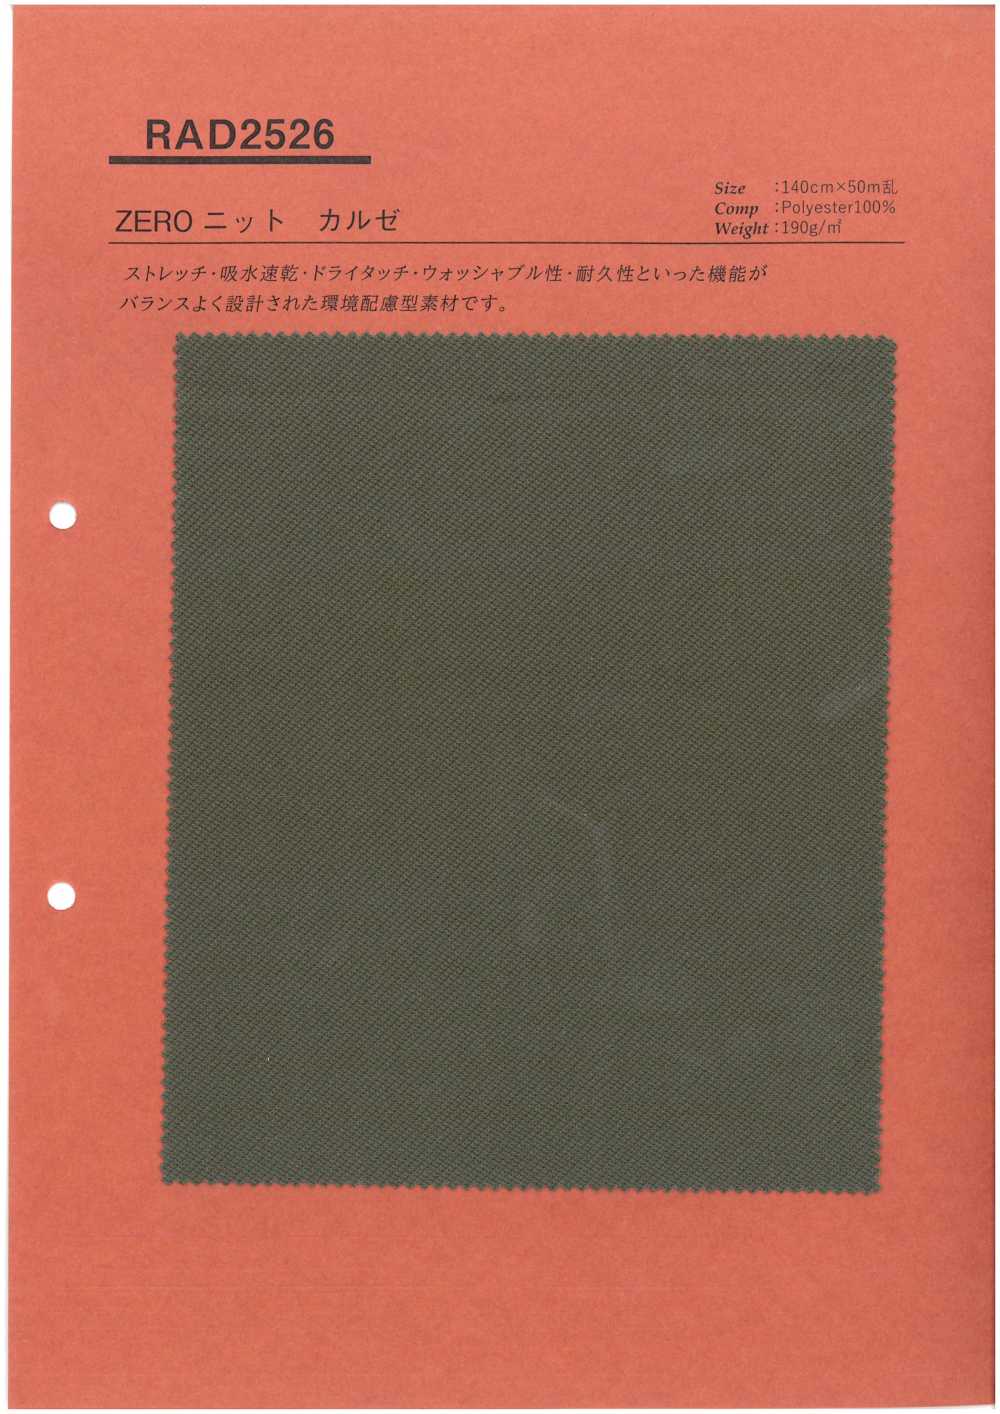 RAD2526 Sustenza® ZERO Kersey[Fabrication De Textile] Takato